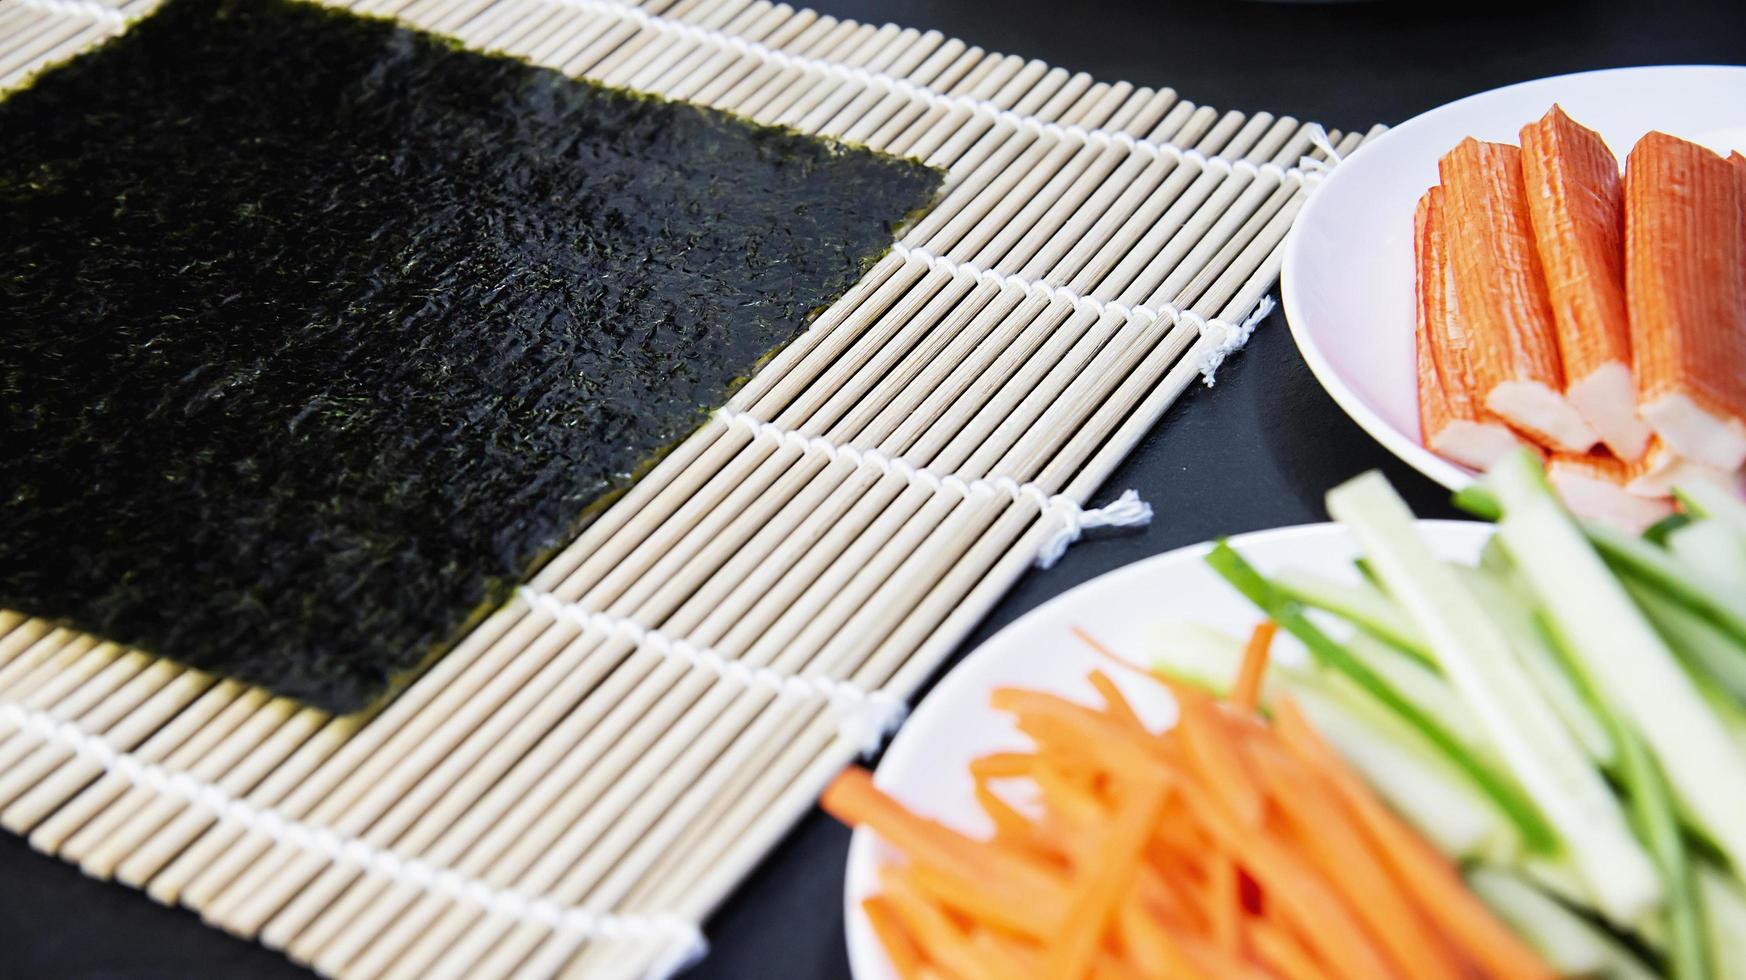 Sushi roll preparing - favorite dish Japanese food recipe concept photo